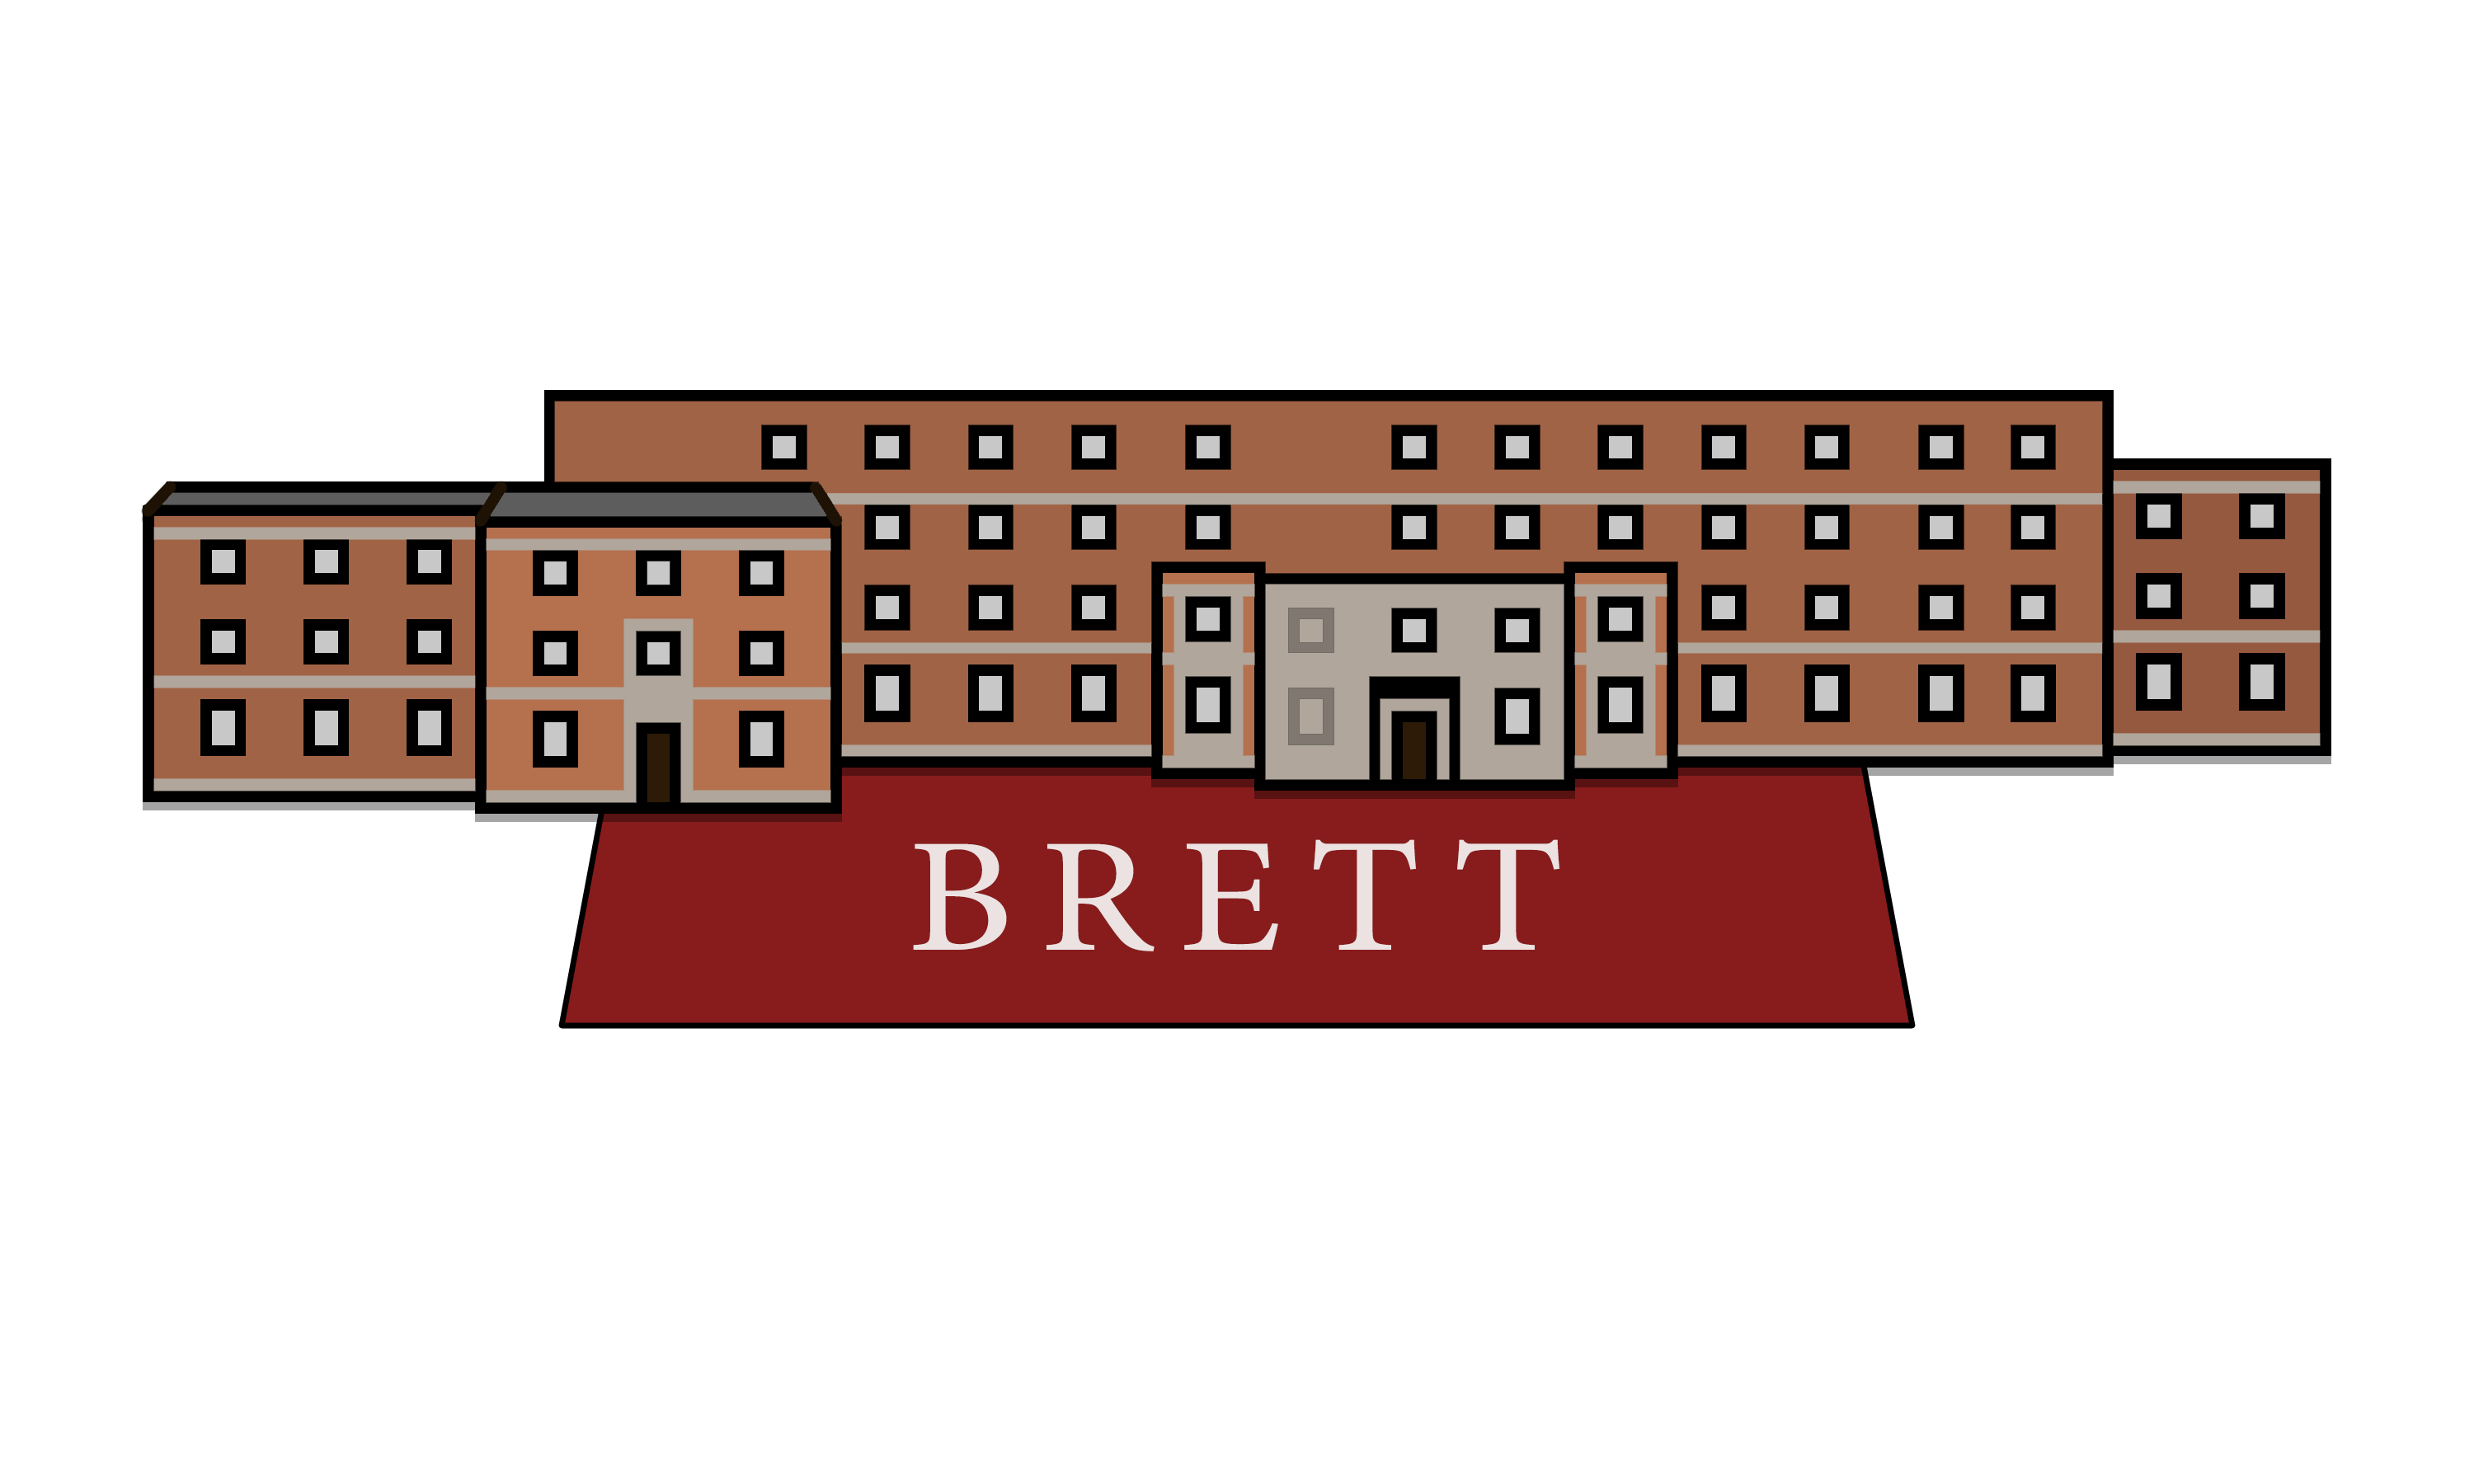 An icon of Brett House at UMass